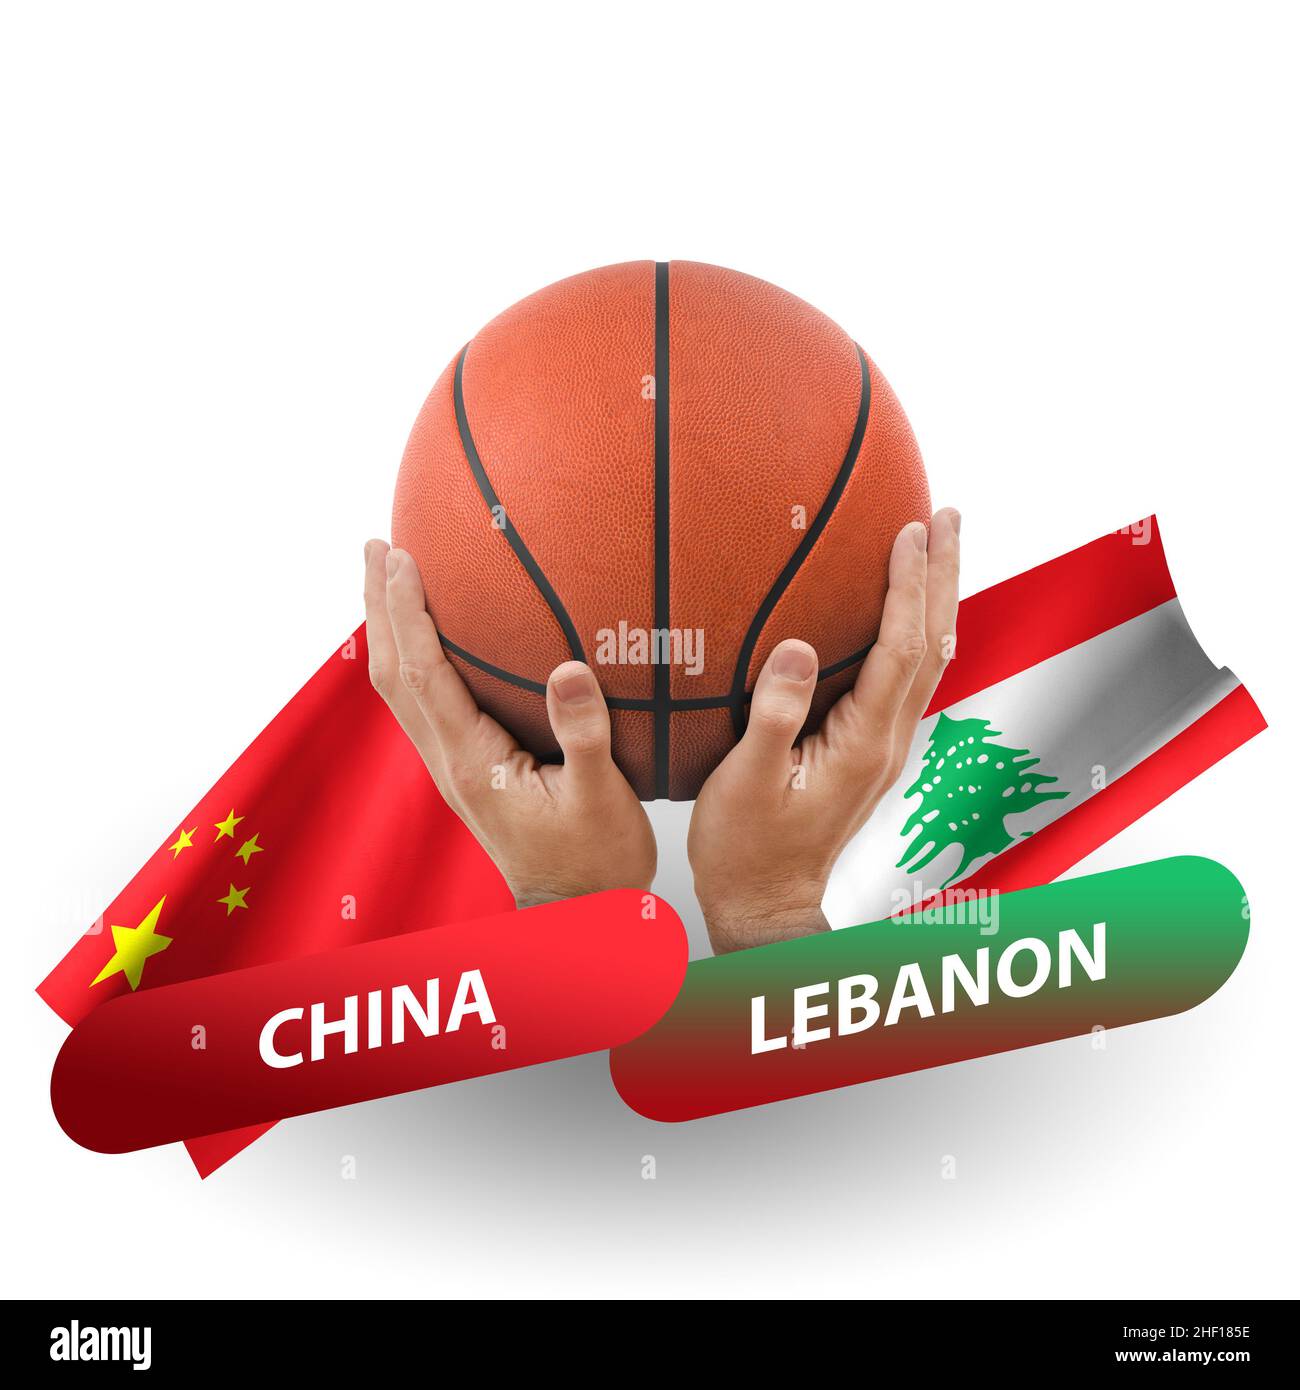 Lebanon vs China national basketball teams basket ball match competition  cup concept image Stock Photo - Alamy